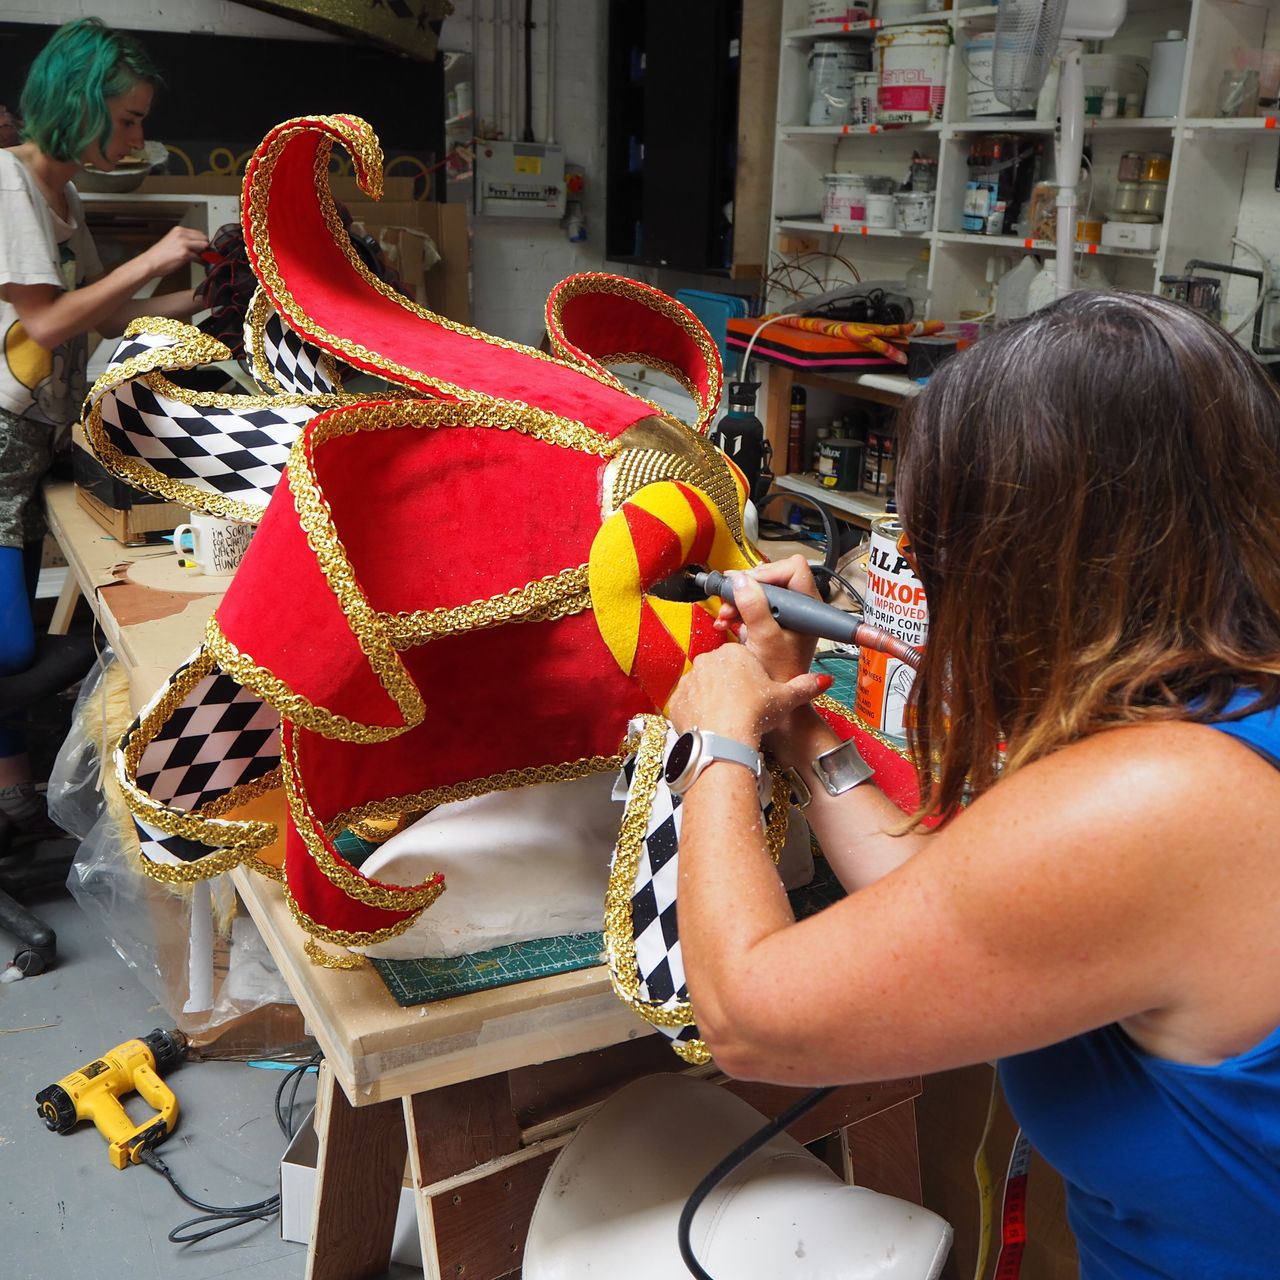 Work is done on Harlequin's Venetian-inspired mask